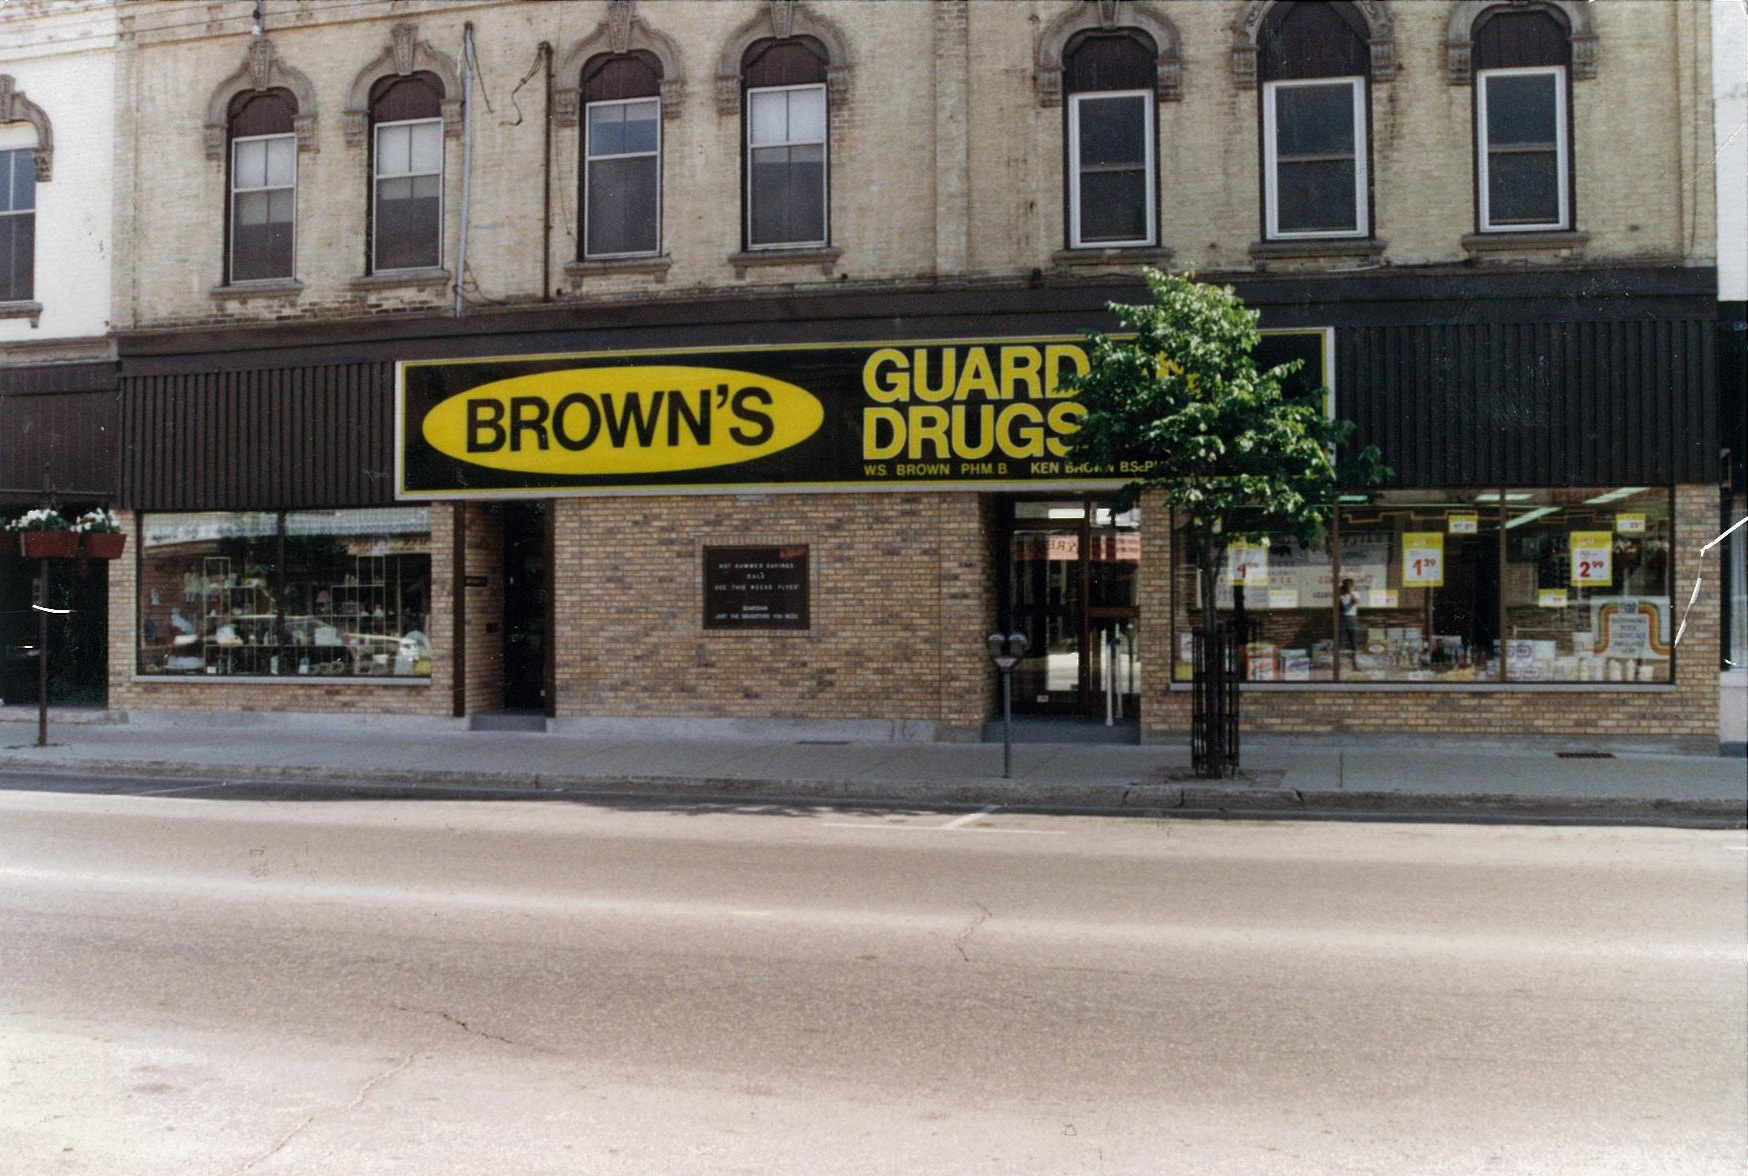 Brown's Guardian Drugs